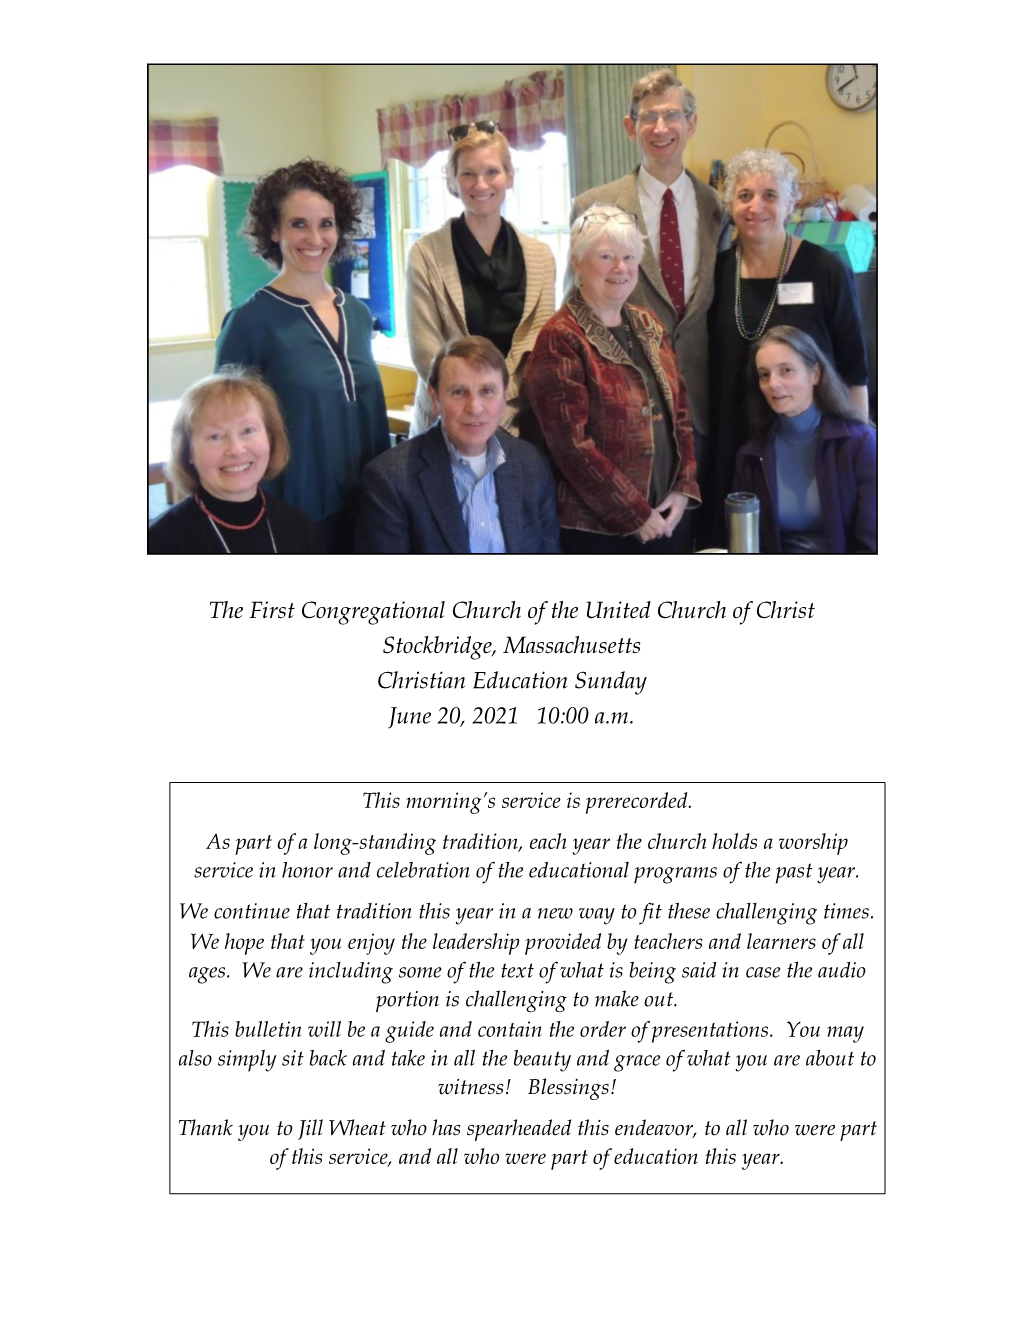 The First Congregational Church of the United Church of Christ Stockbridge, Massachusetts Christian Education Sunday June 20, 2021 10:00 A.M